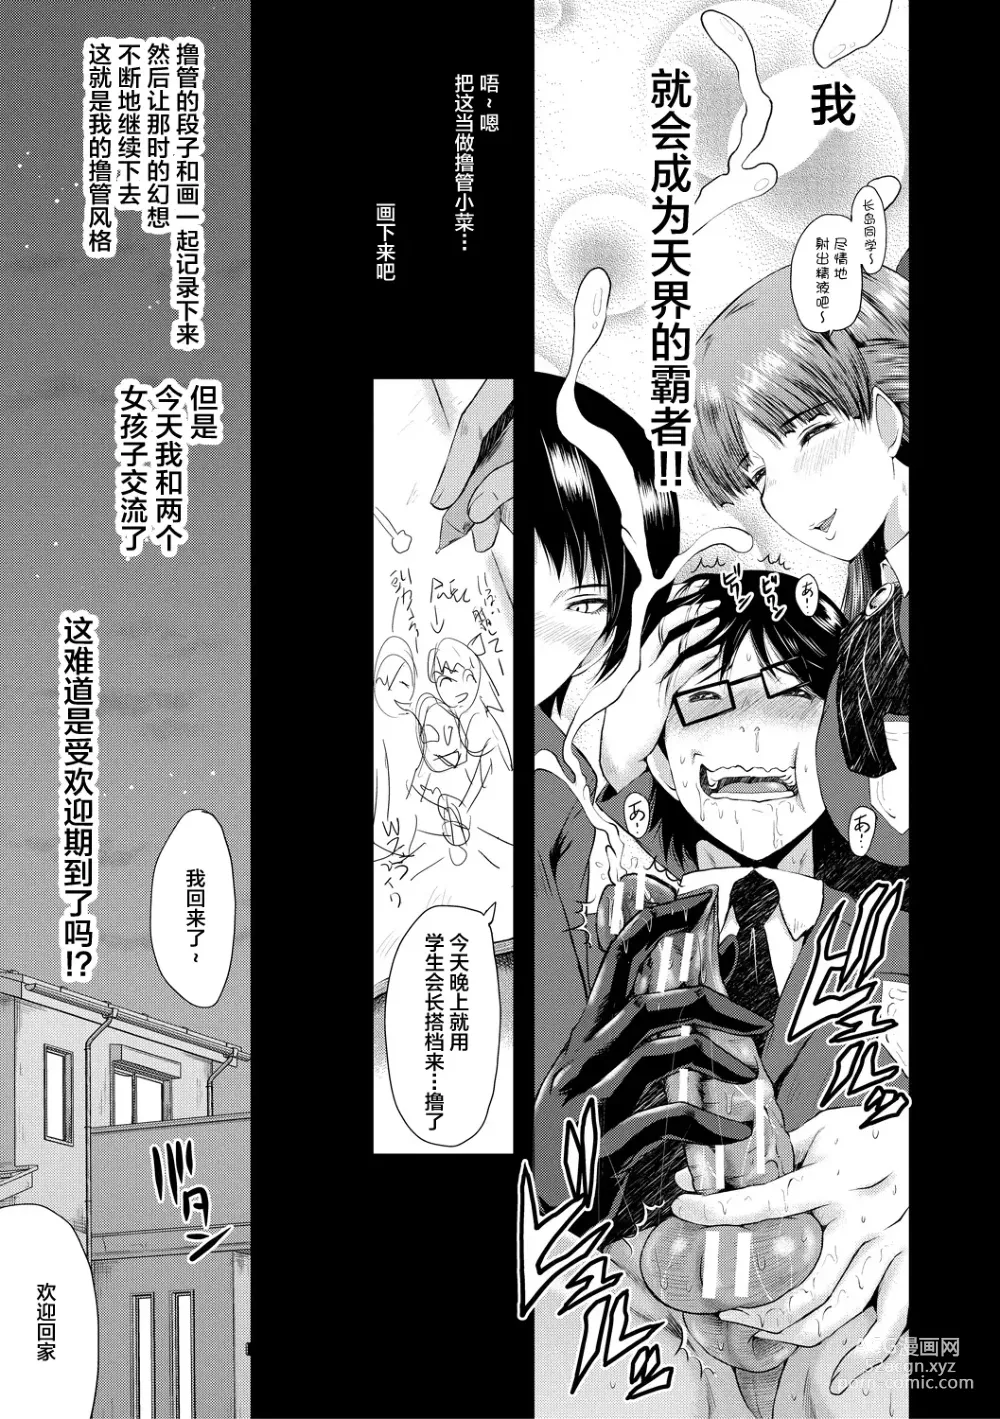 Page 11 of manga Sennou Kikan